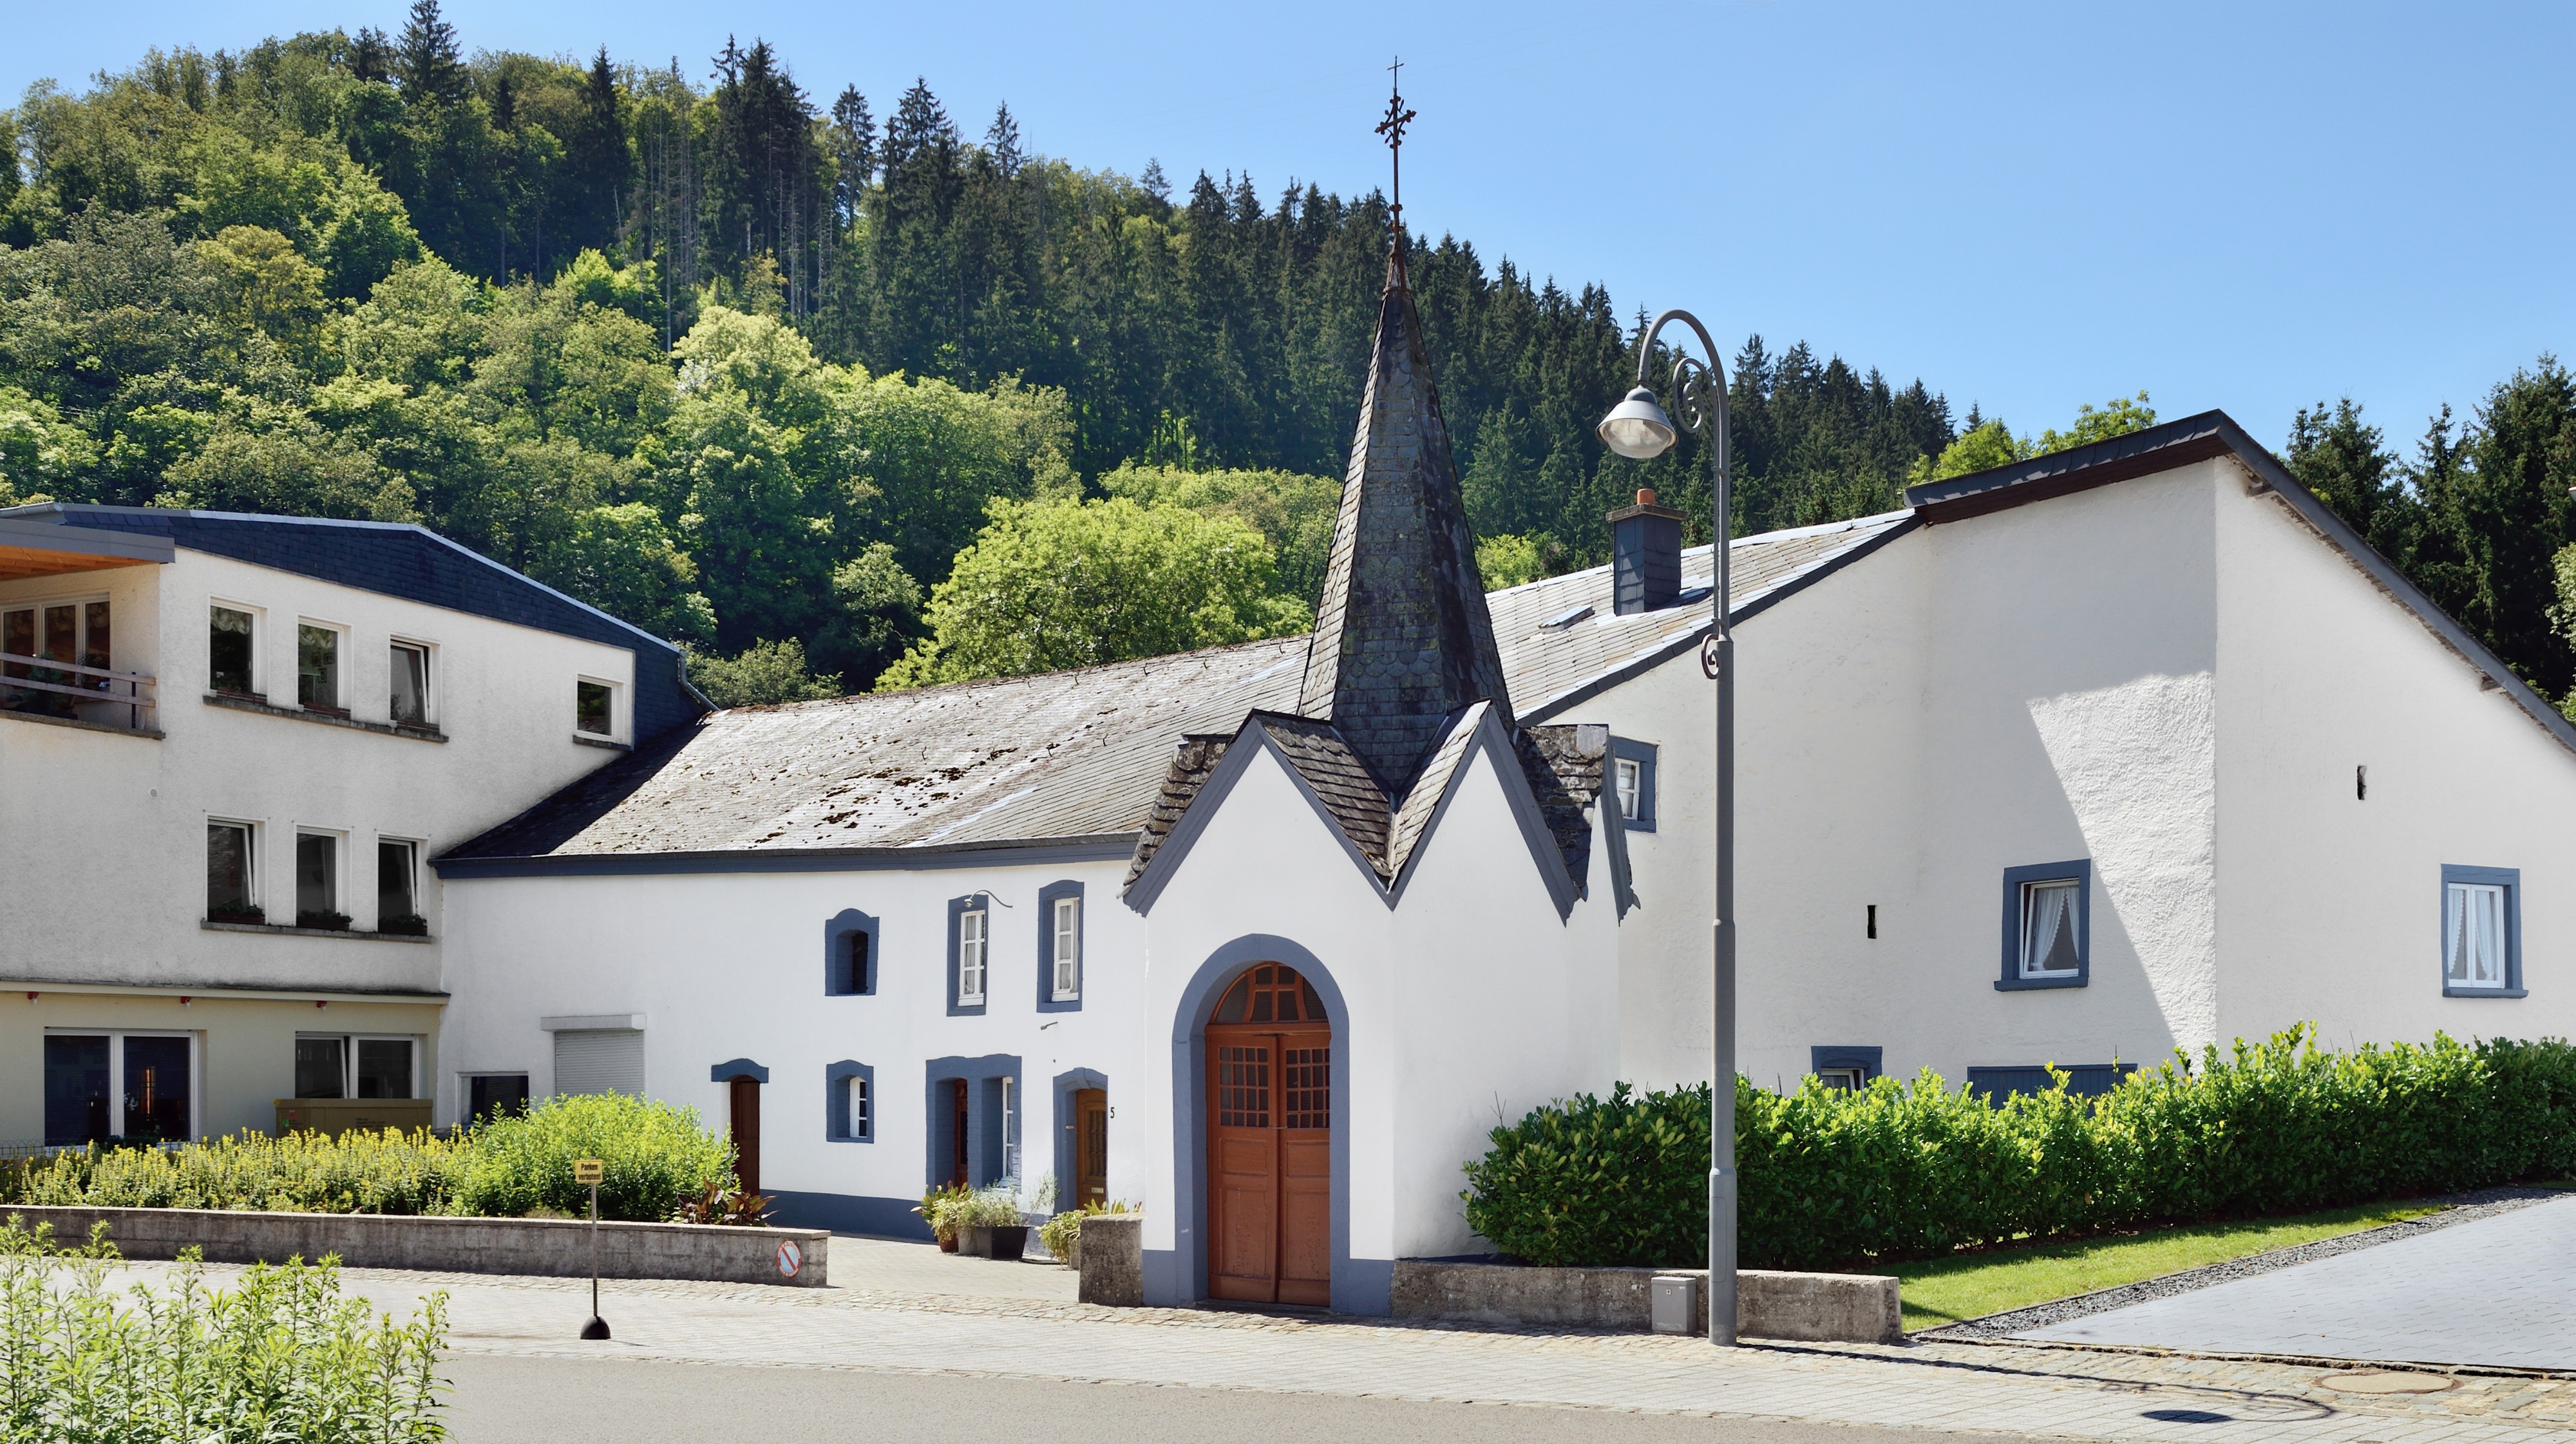 Kautenbach houses and chapel 2012